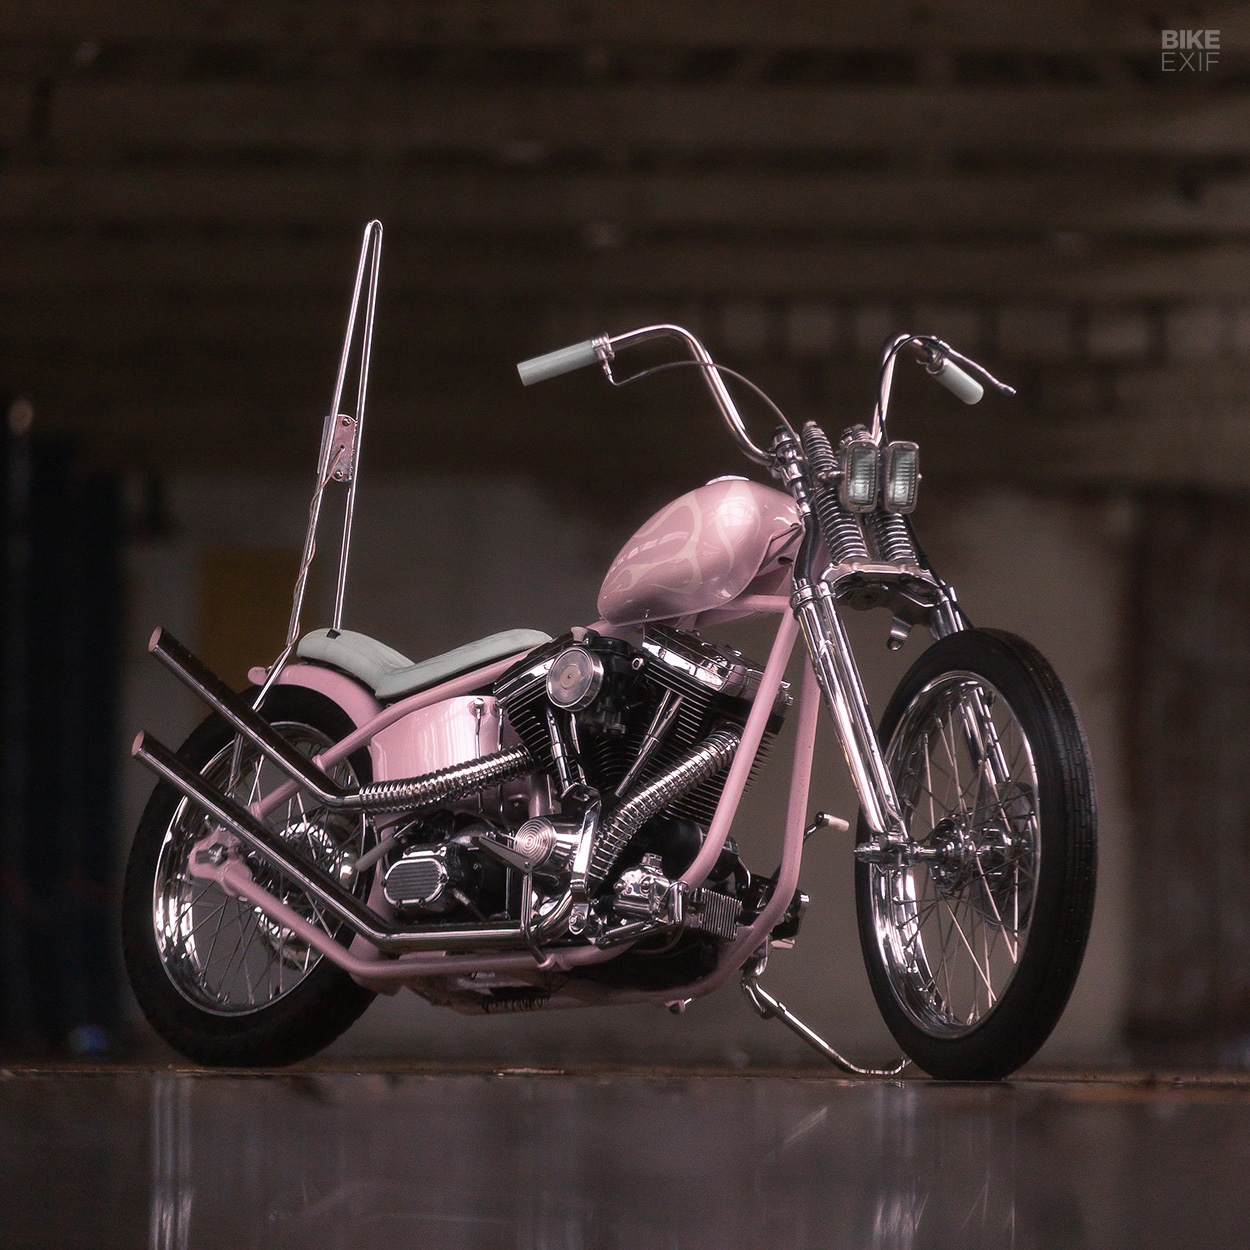 1995 Harley-Davidson Softail chopper by Prism Supply Co.